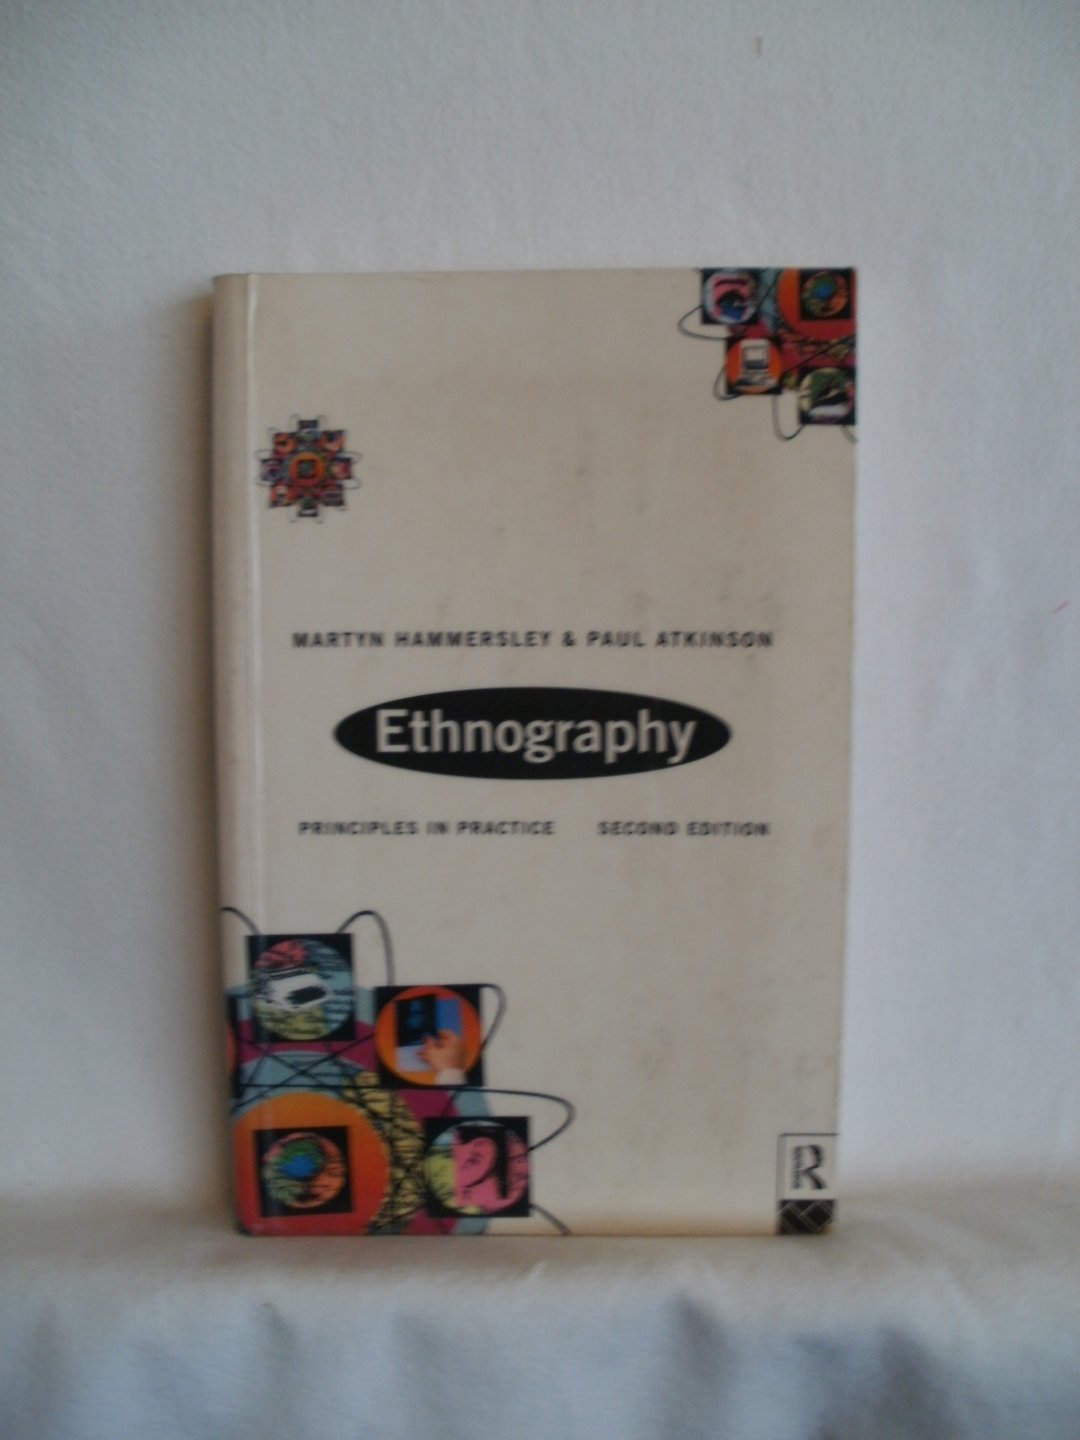 Hammersley, Martyn; Atkinson, Paul - Ethnography / Principles in Practice